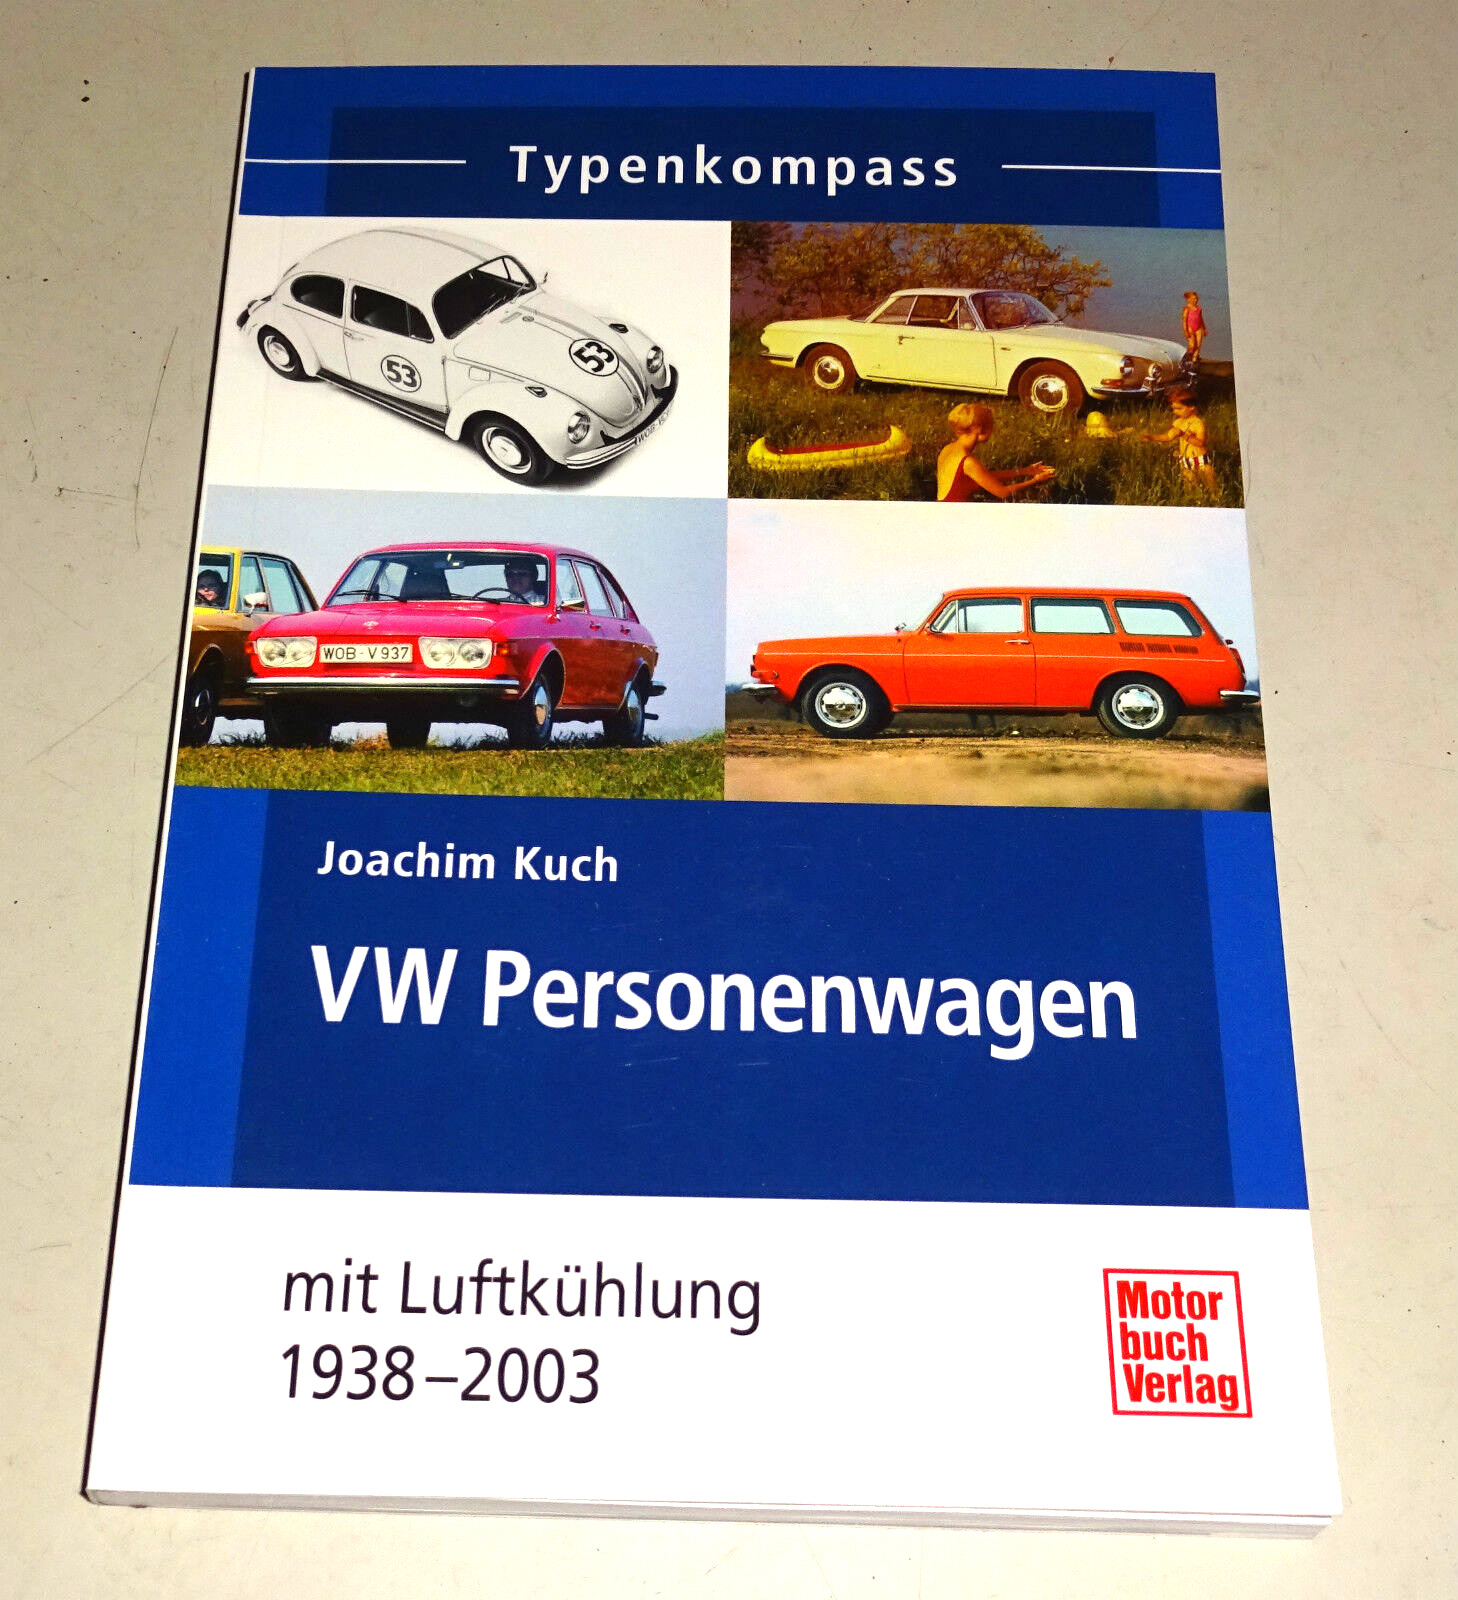 VW Personenwagen - VW Käfer, VW 411/412, Porsche 914, Kübelwagen - Typenkompass